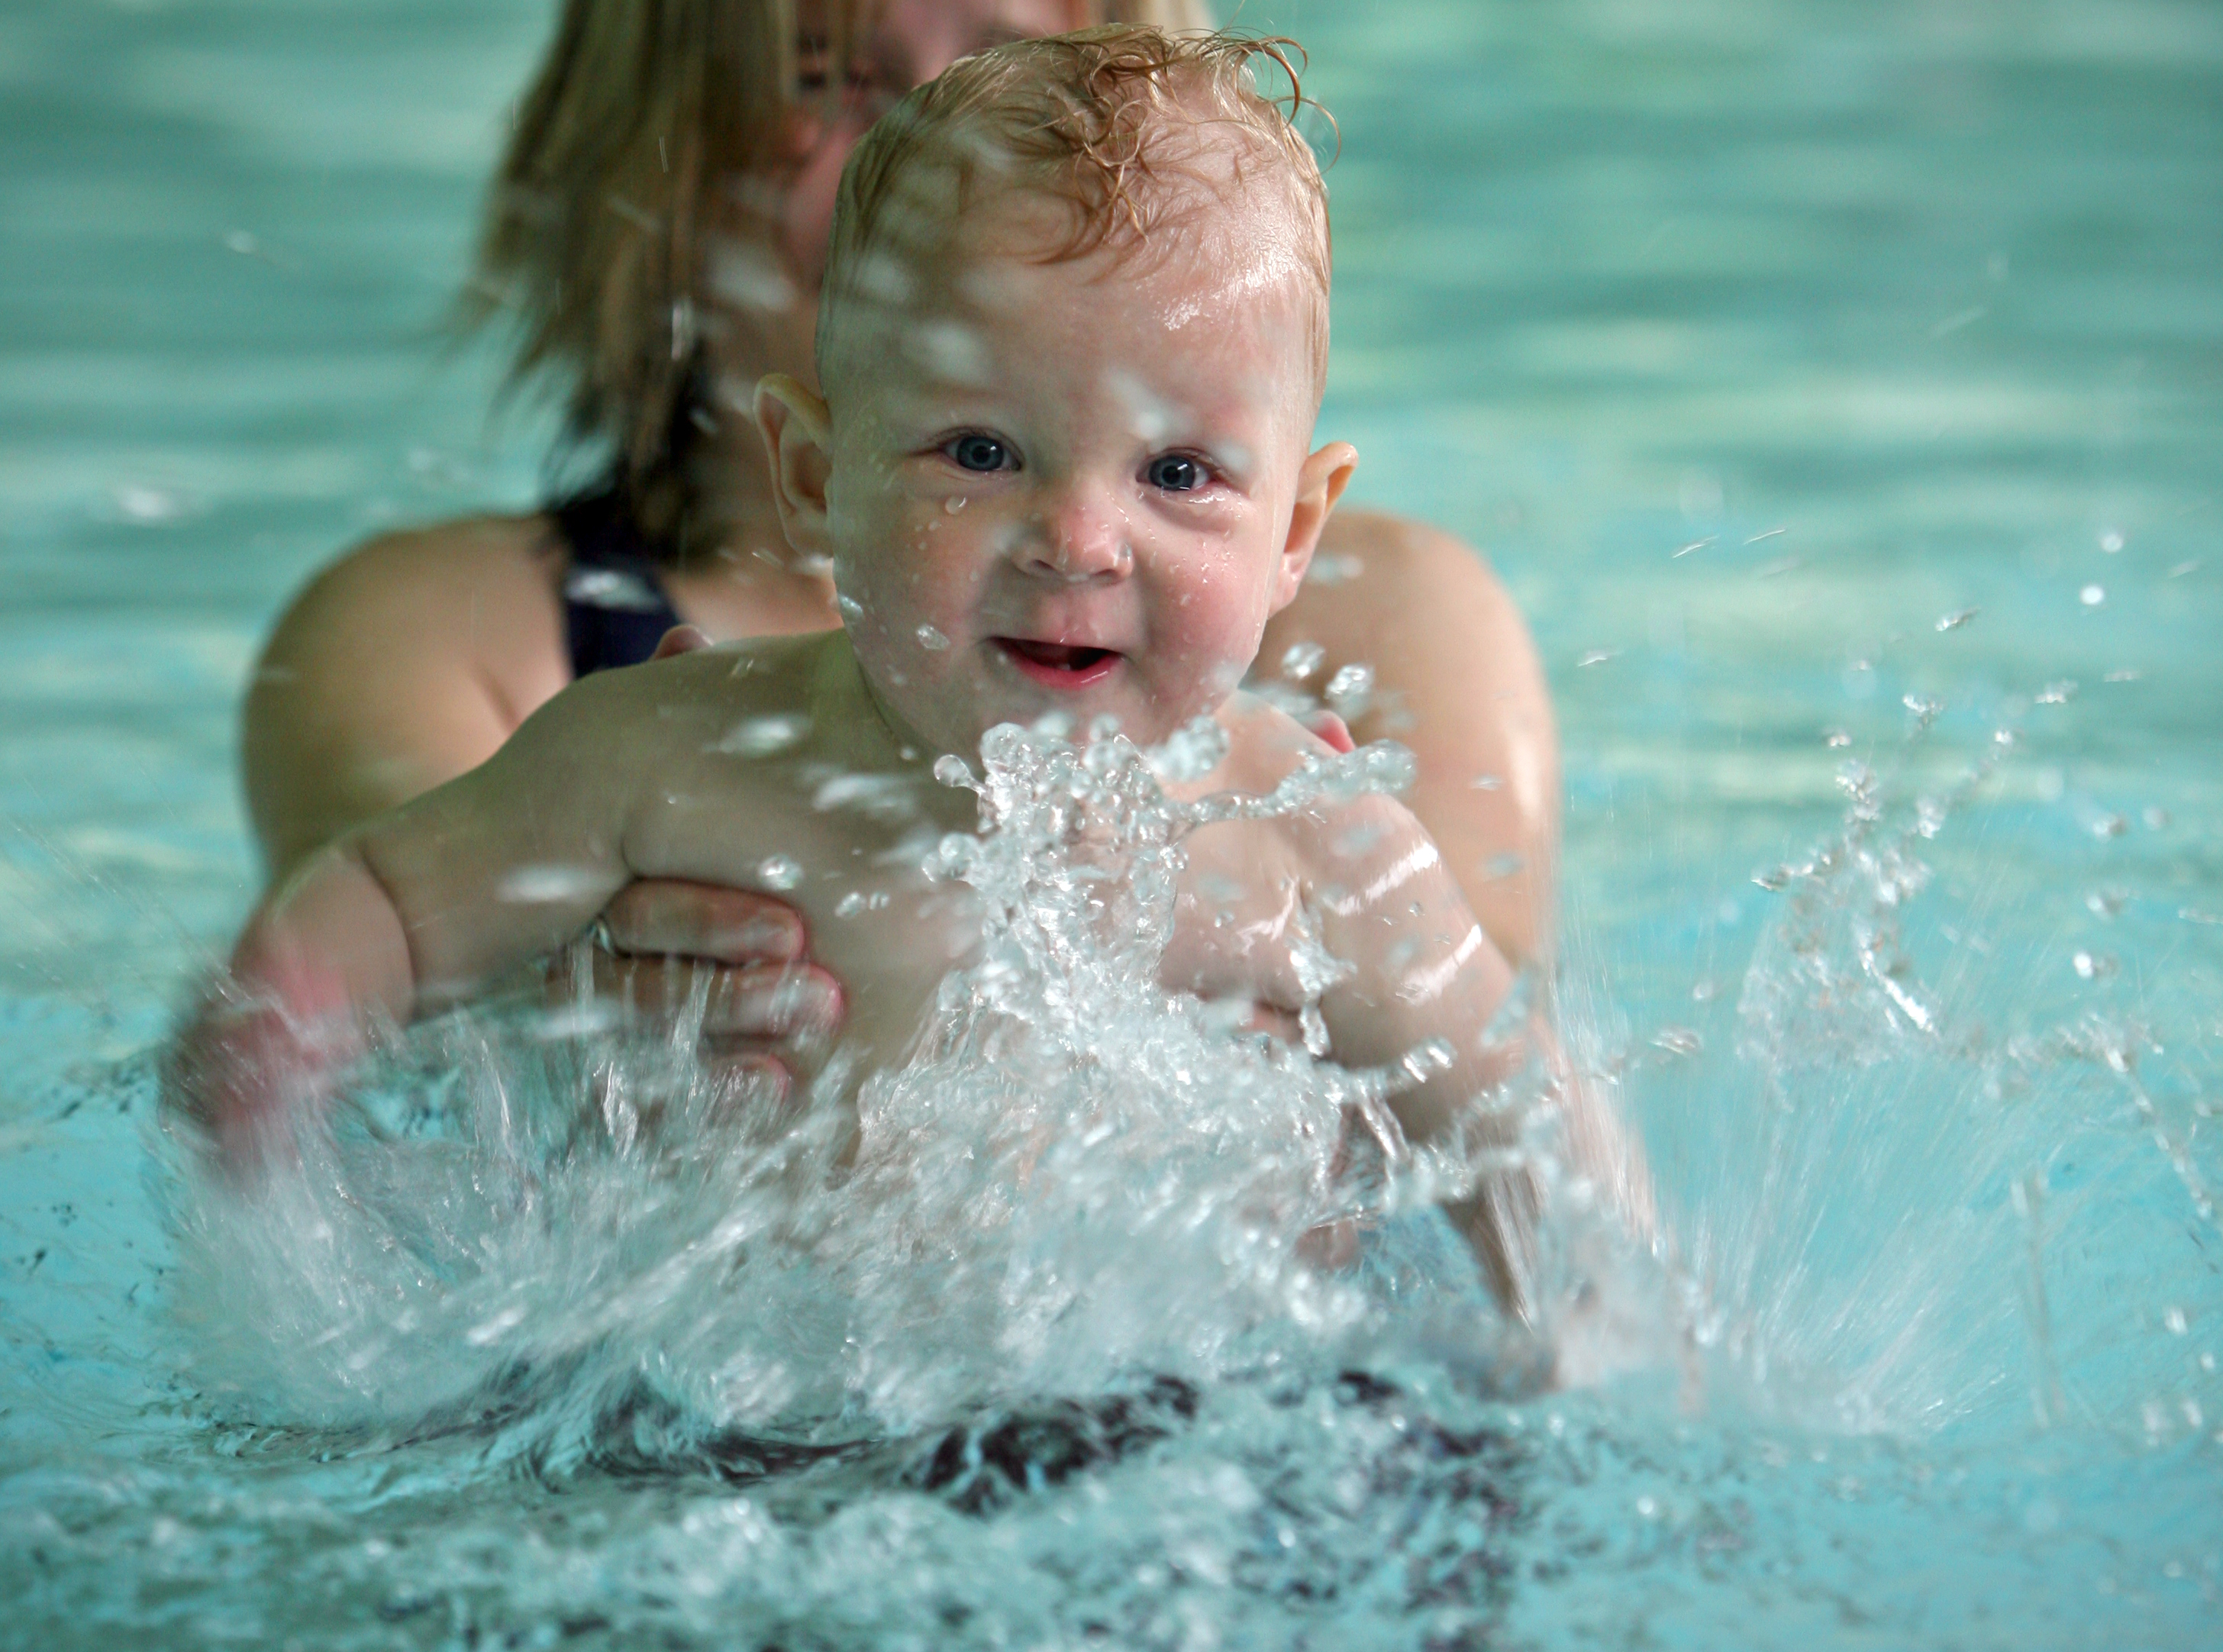 young baby splashing in water